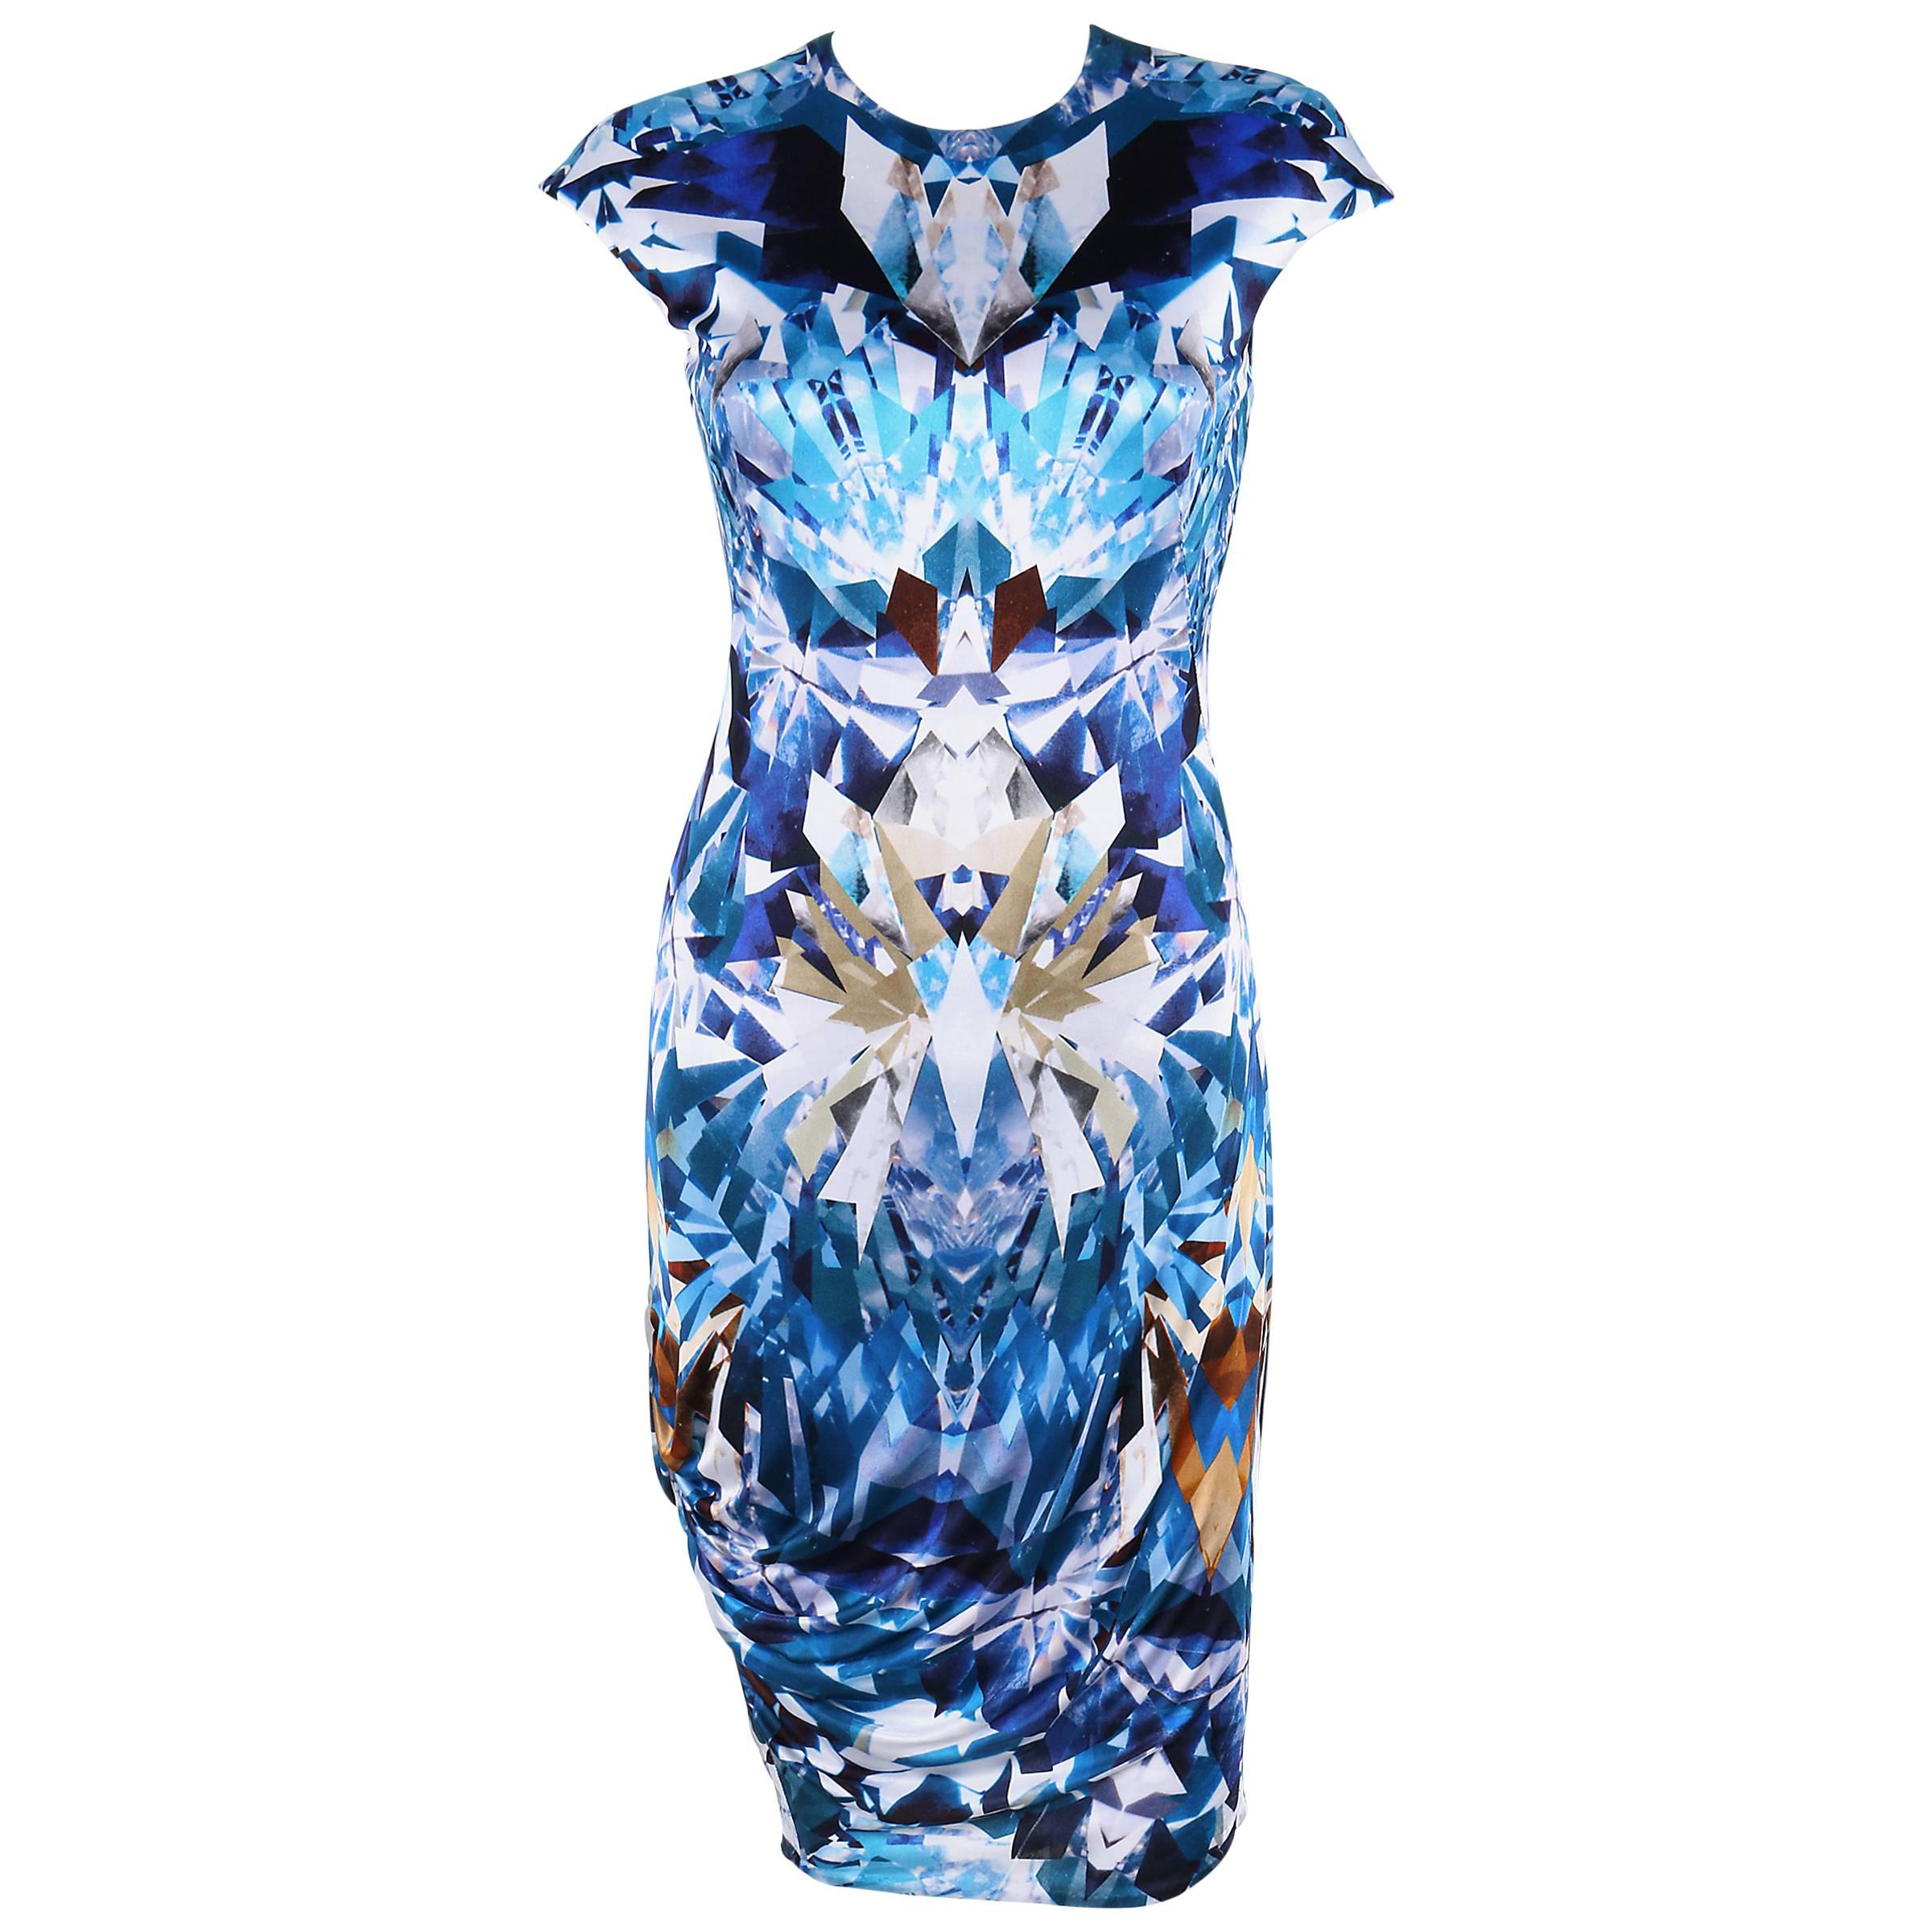 ALEXANDER McQUEEN S/S 2009 Iconic Blue Crystal Kaleidoscope Print Dress 38